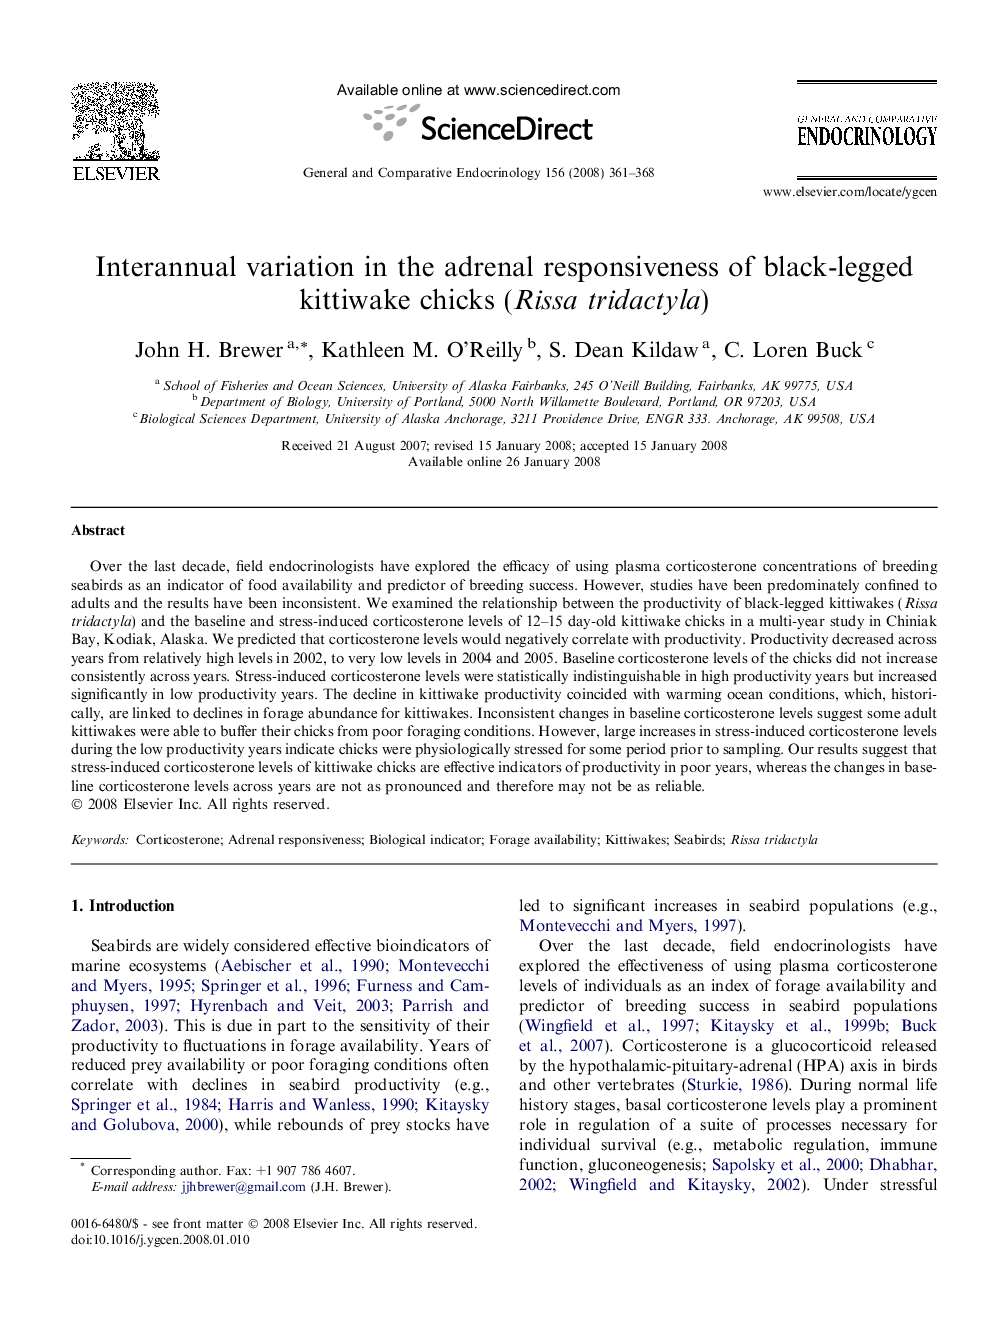 Interannual variation in the adrenal responsiveness of black-legged kittiwake chicks (Rissa tridactyla)